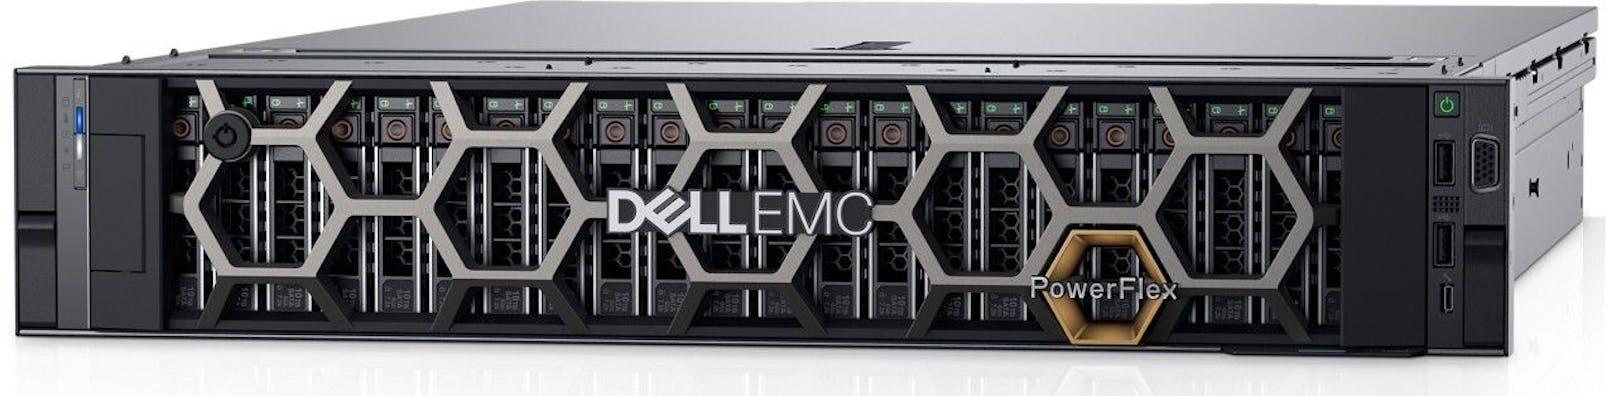 Dell Technologies bringt PowerFlex in die AWS-Cloud.